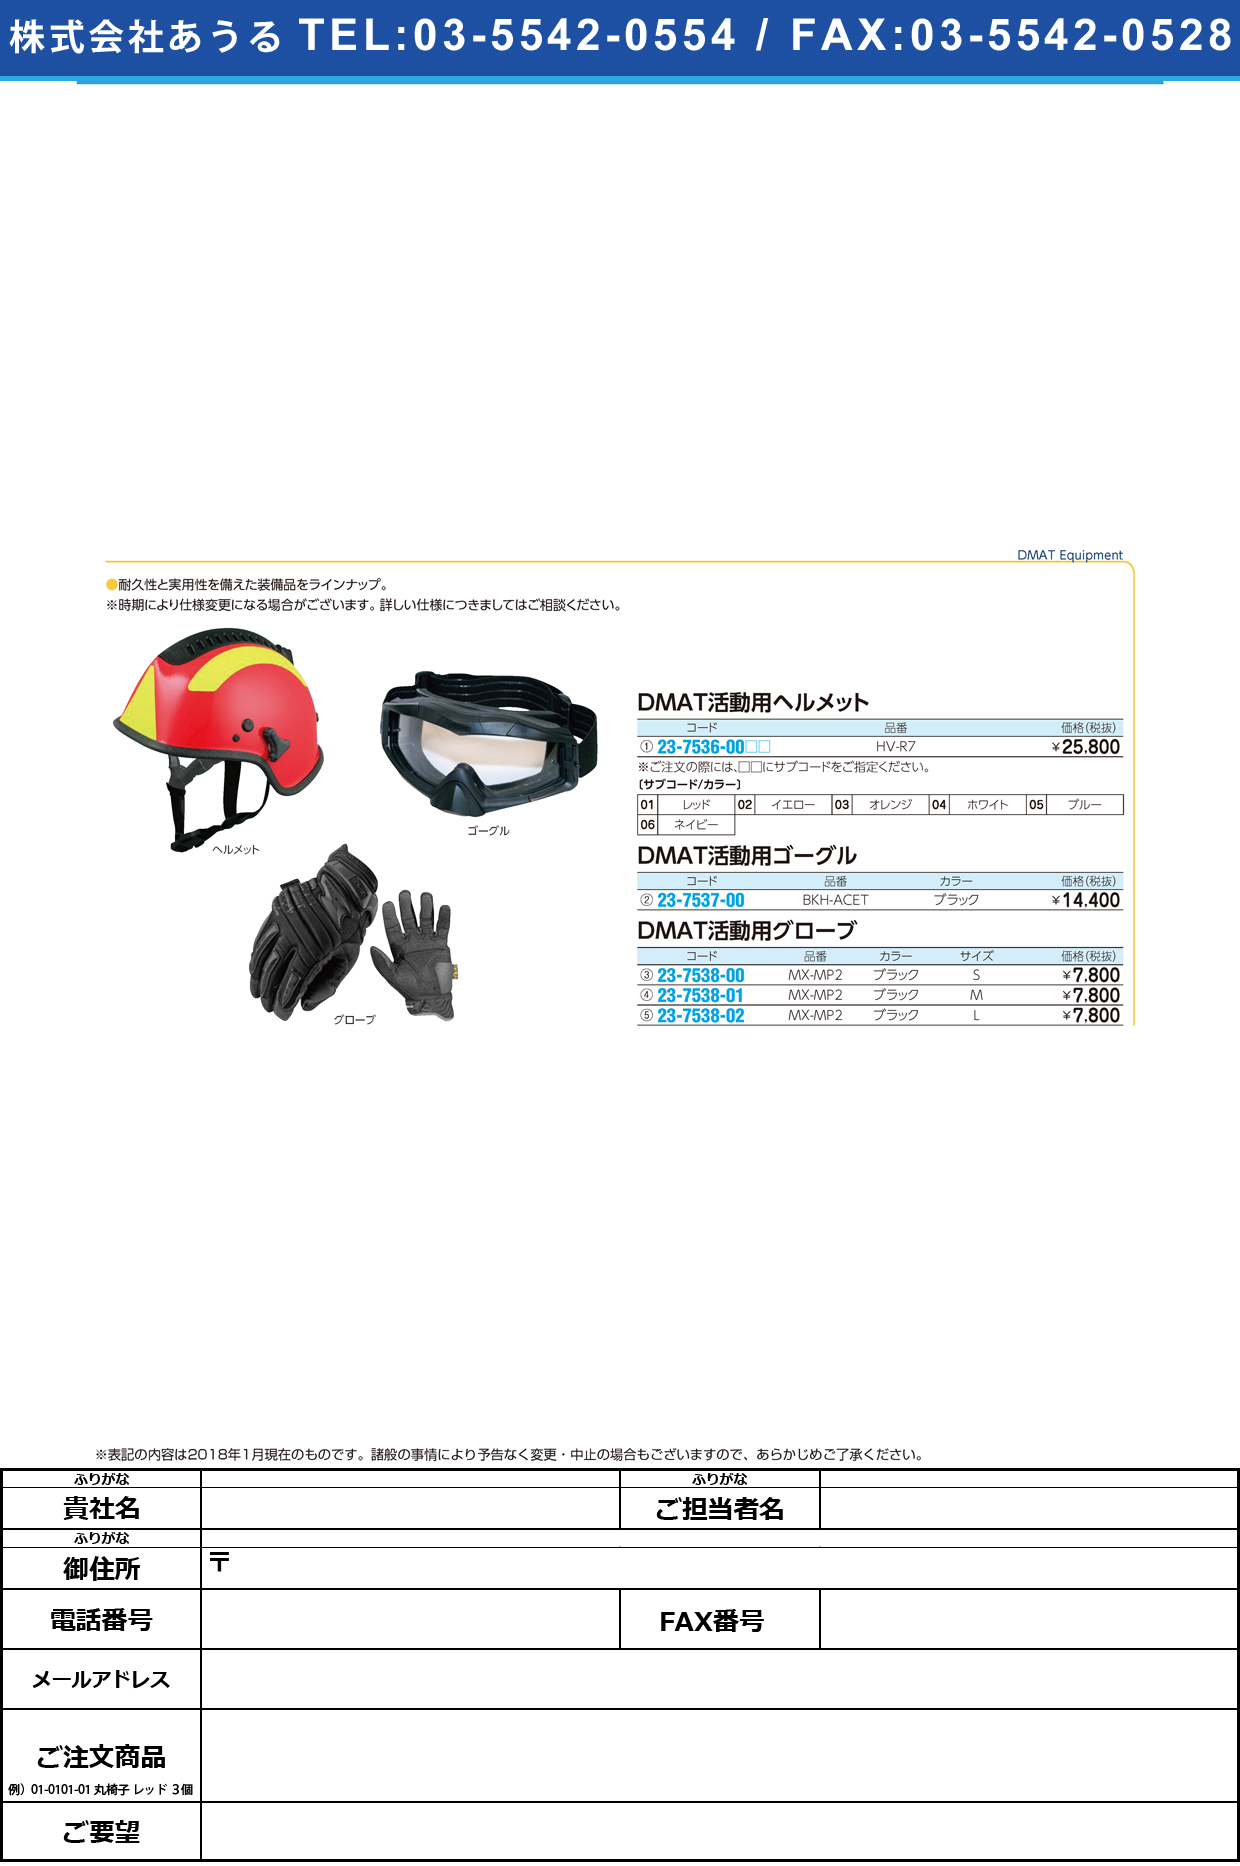 (23-7536-00)ＤＭＡＴ活動用ヘルメット HV-R7 DMATｶﾂﾄﾞｳﾖｳﾍﾙﾒｯﾄ ネイビー【1個単位】【2018年カタログ商品】